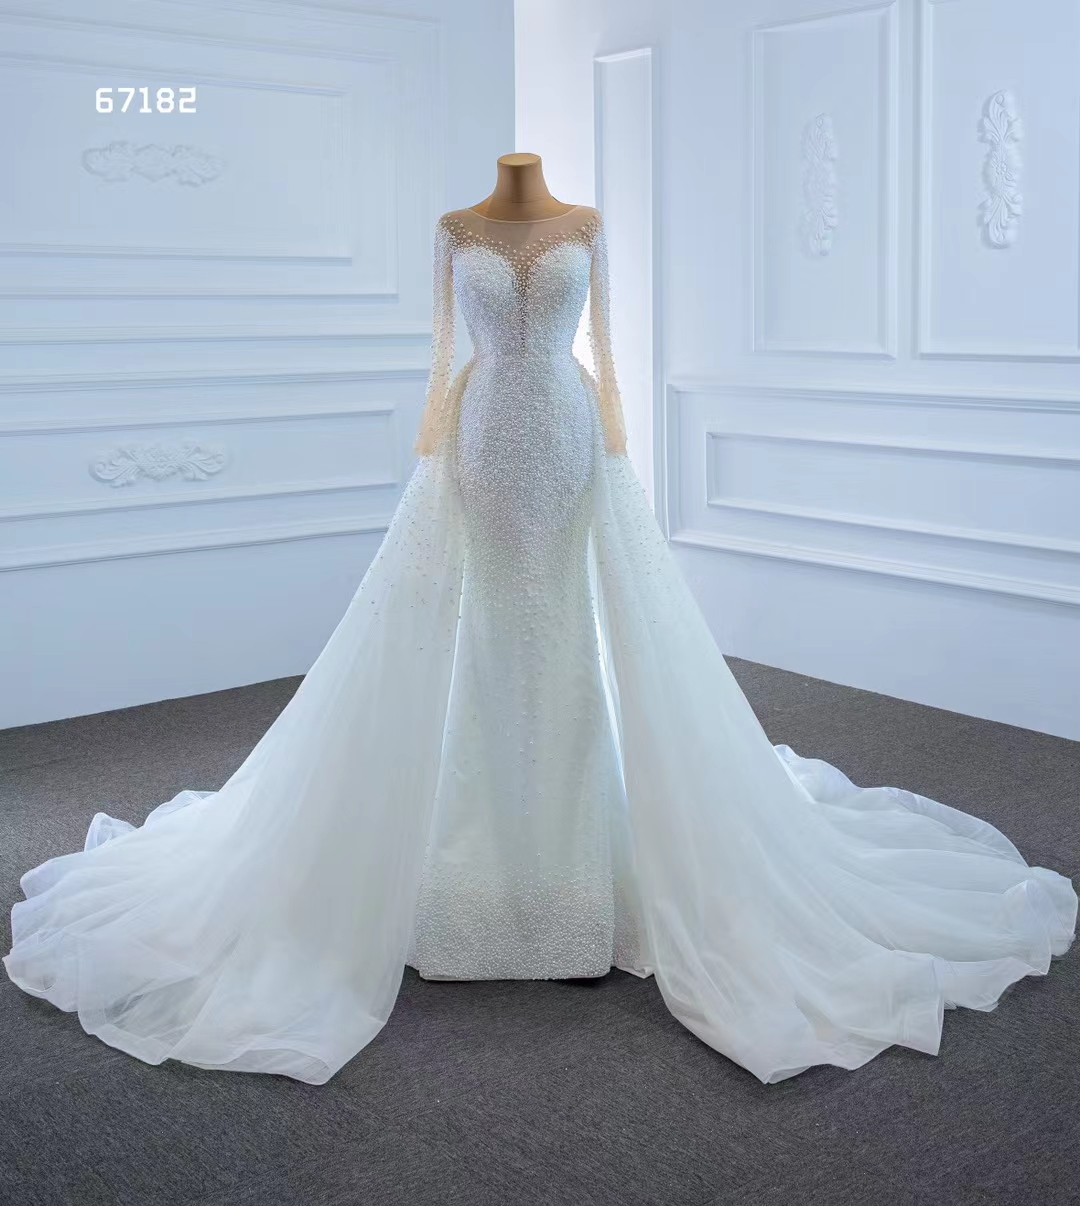 Mermaid Wedding dress Princess Long Sleeve Crystal Lace Dress robe Elegant Sweetheart SM67182